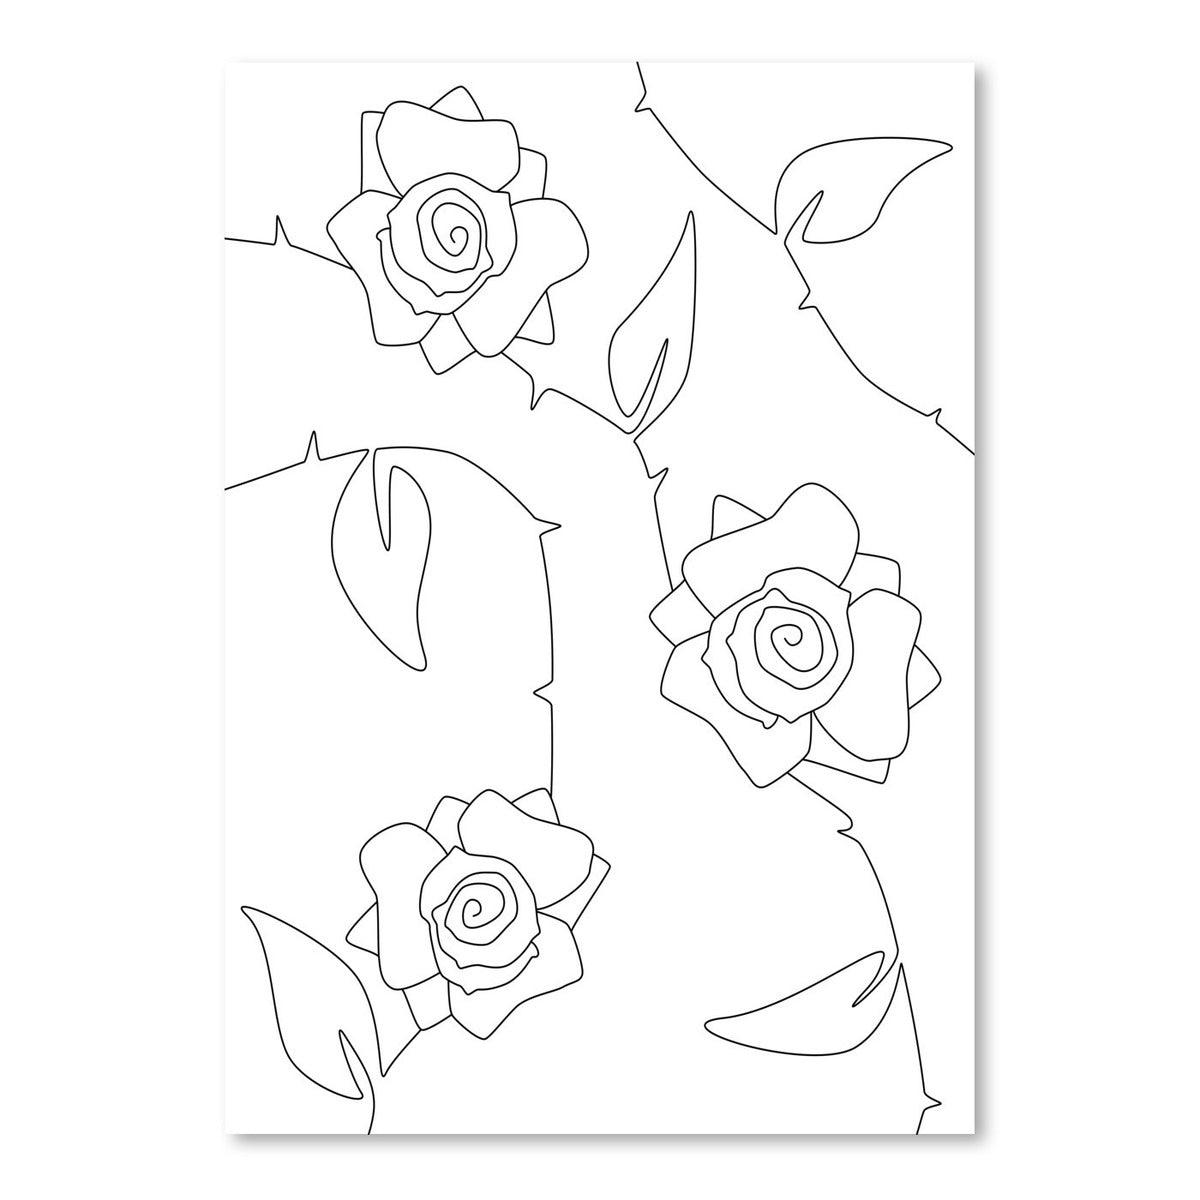 rose bush drawing